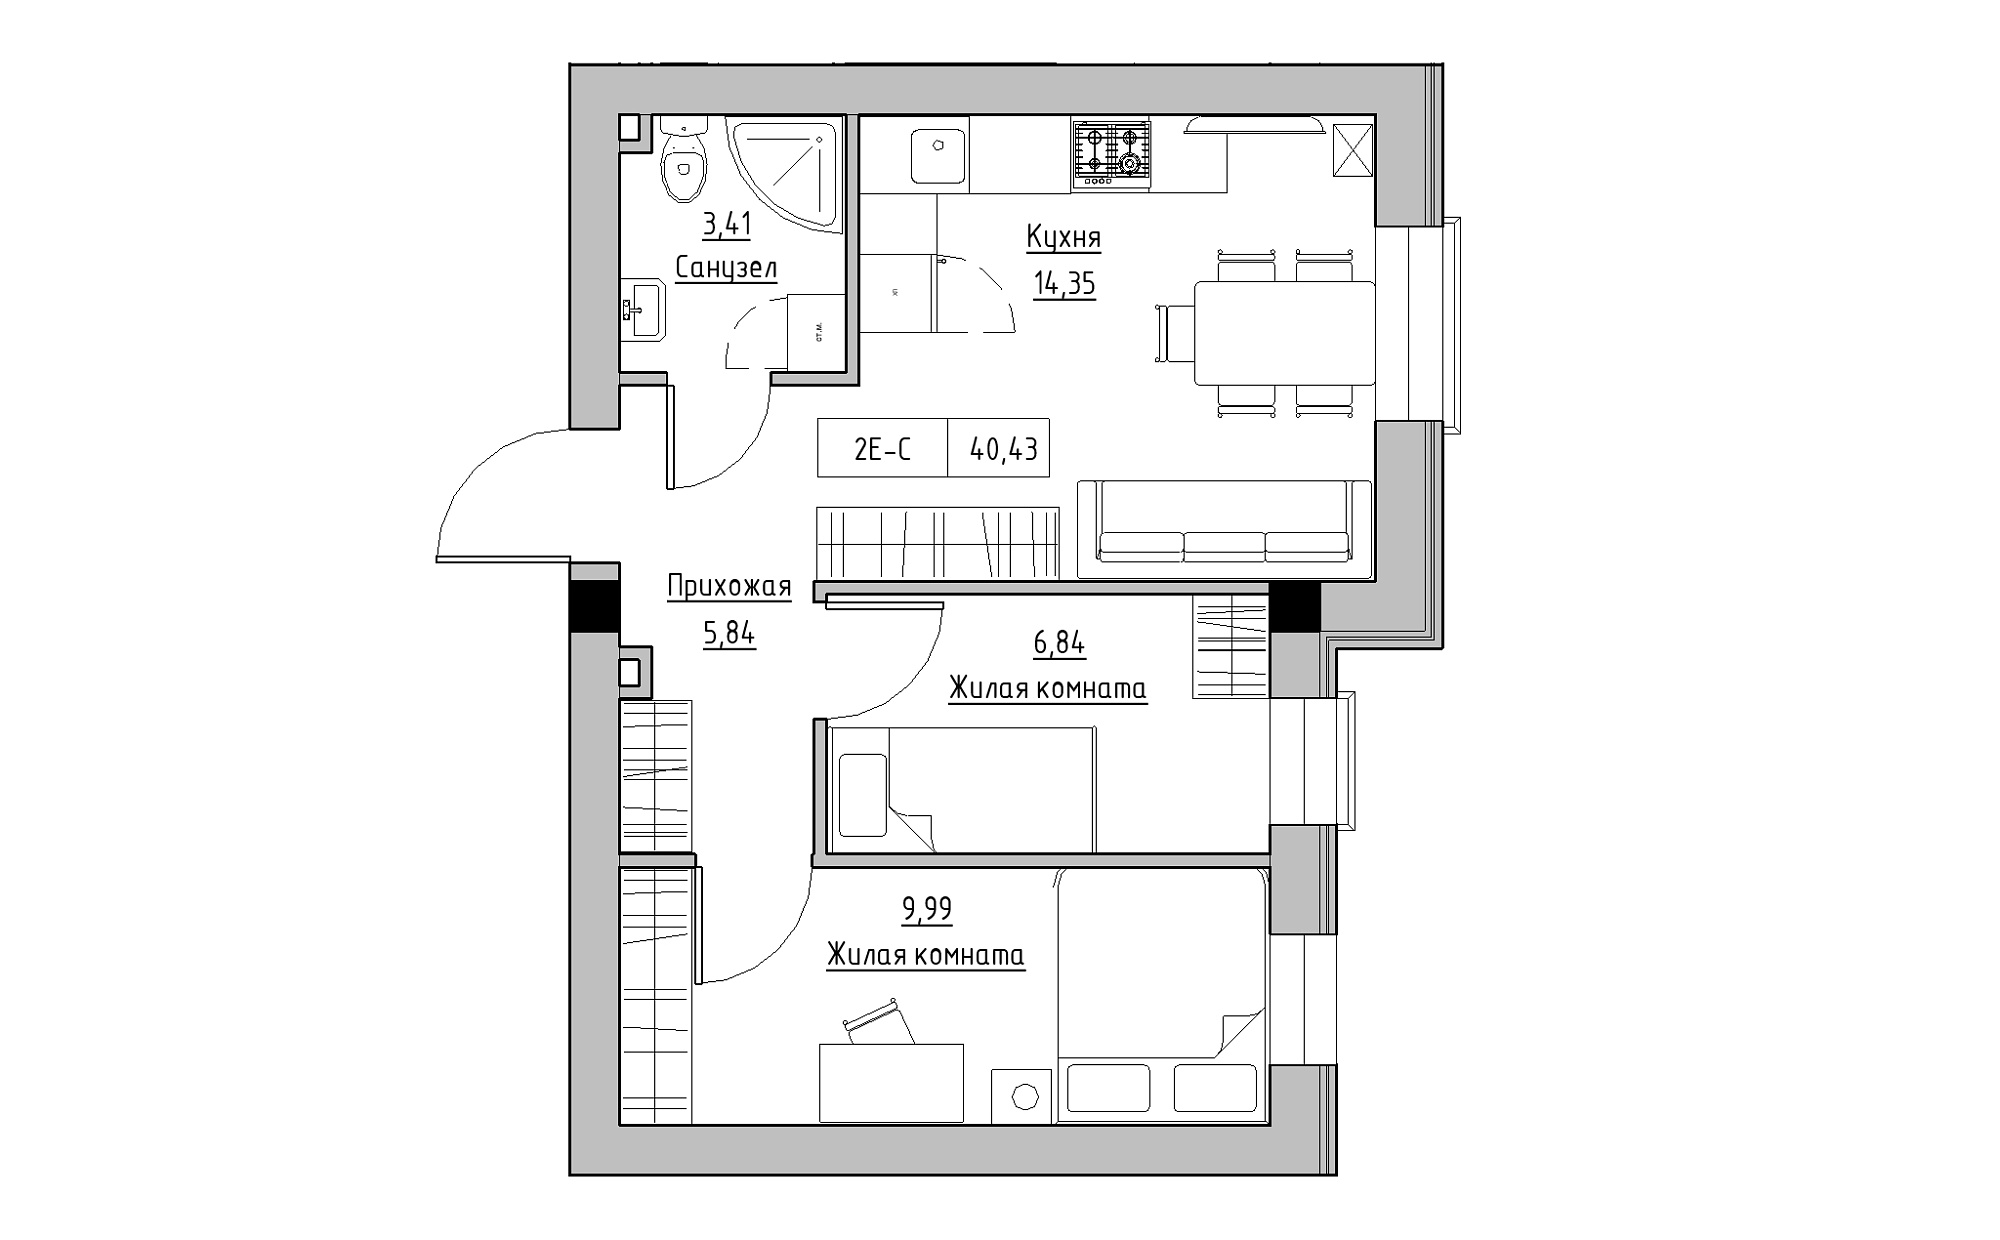 Planning 2-rm flats area 40.43m2, KS-022-01/0010.